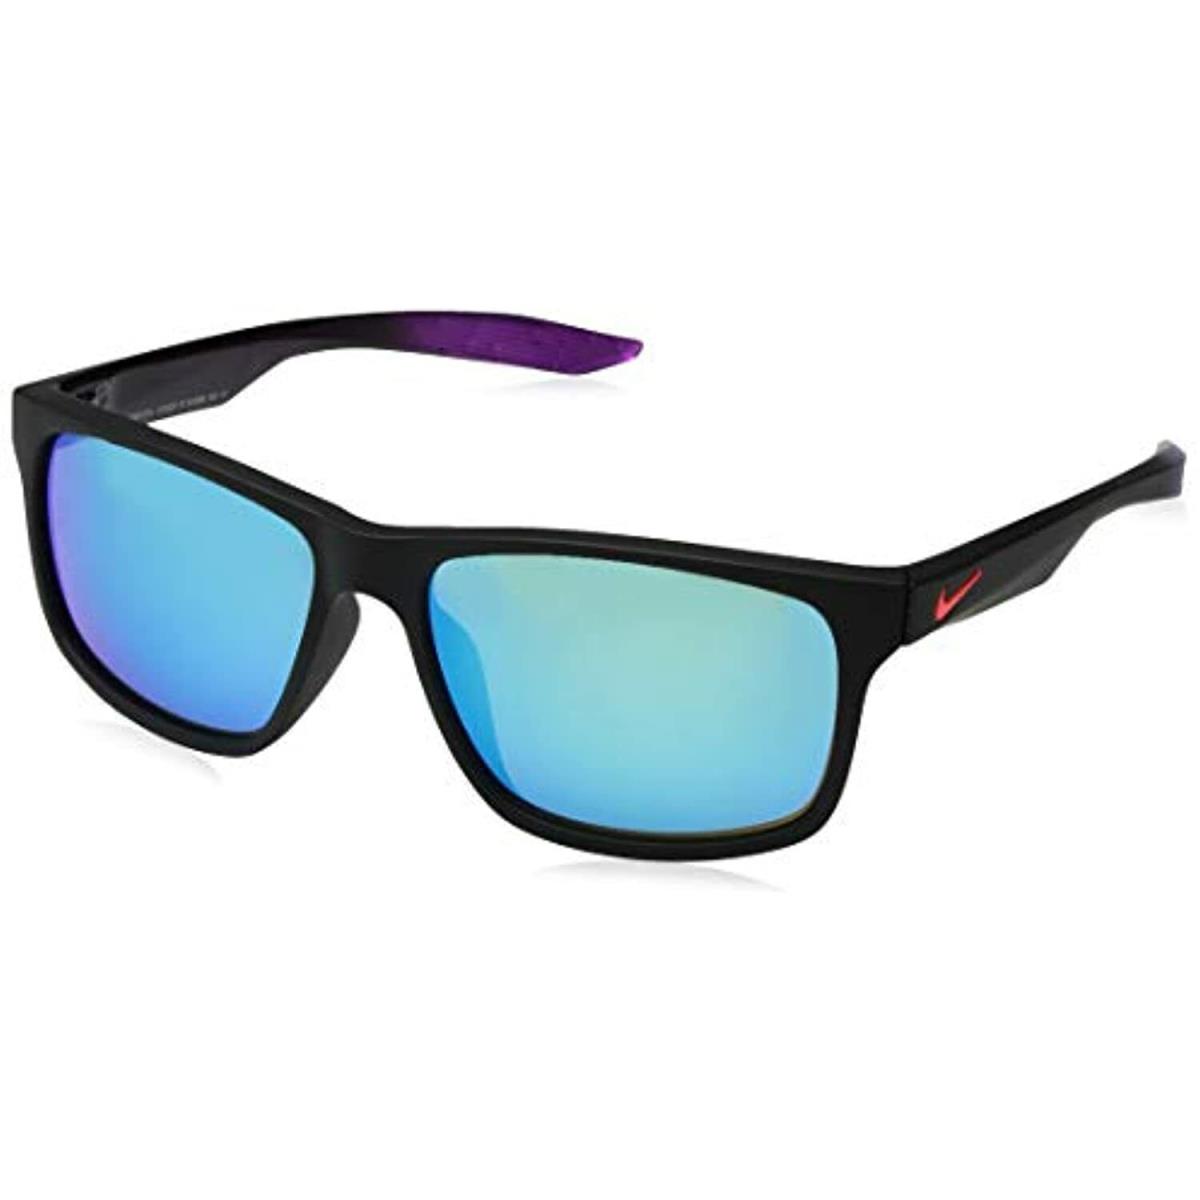 Nike EV0998 063 Matte Black Chaser Sunglasses with Blue/green Mirror Lenses